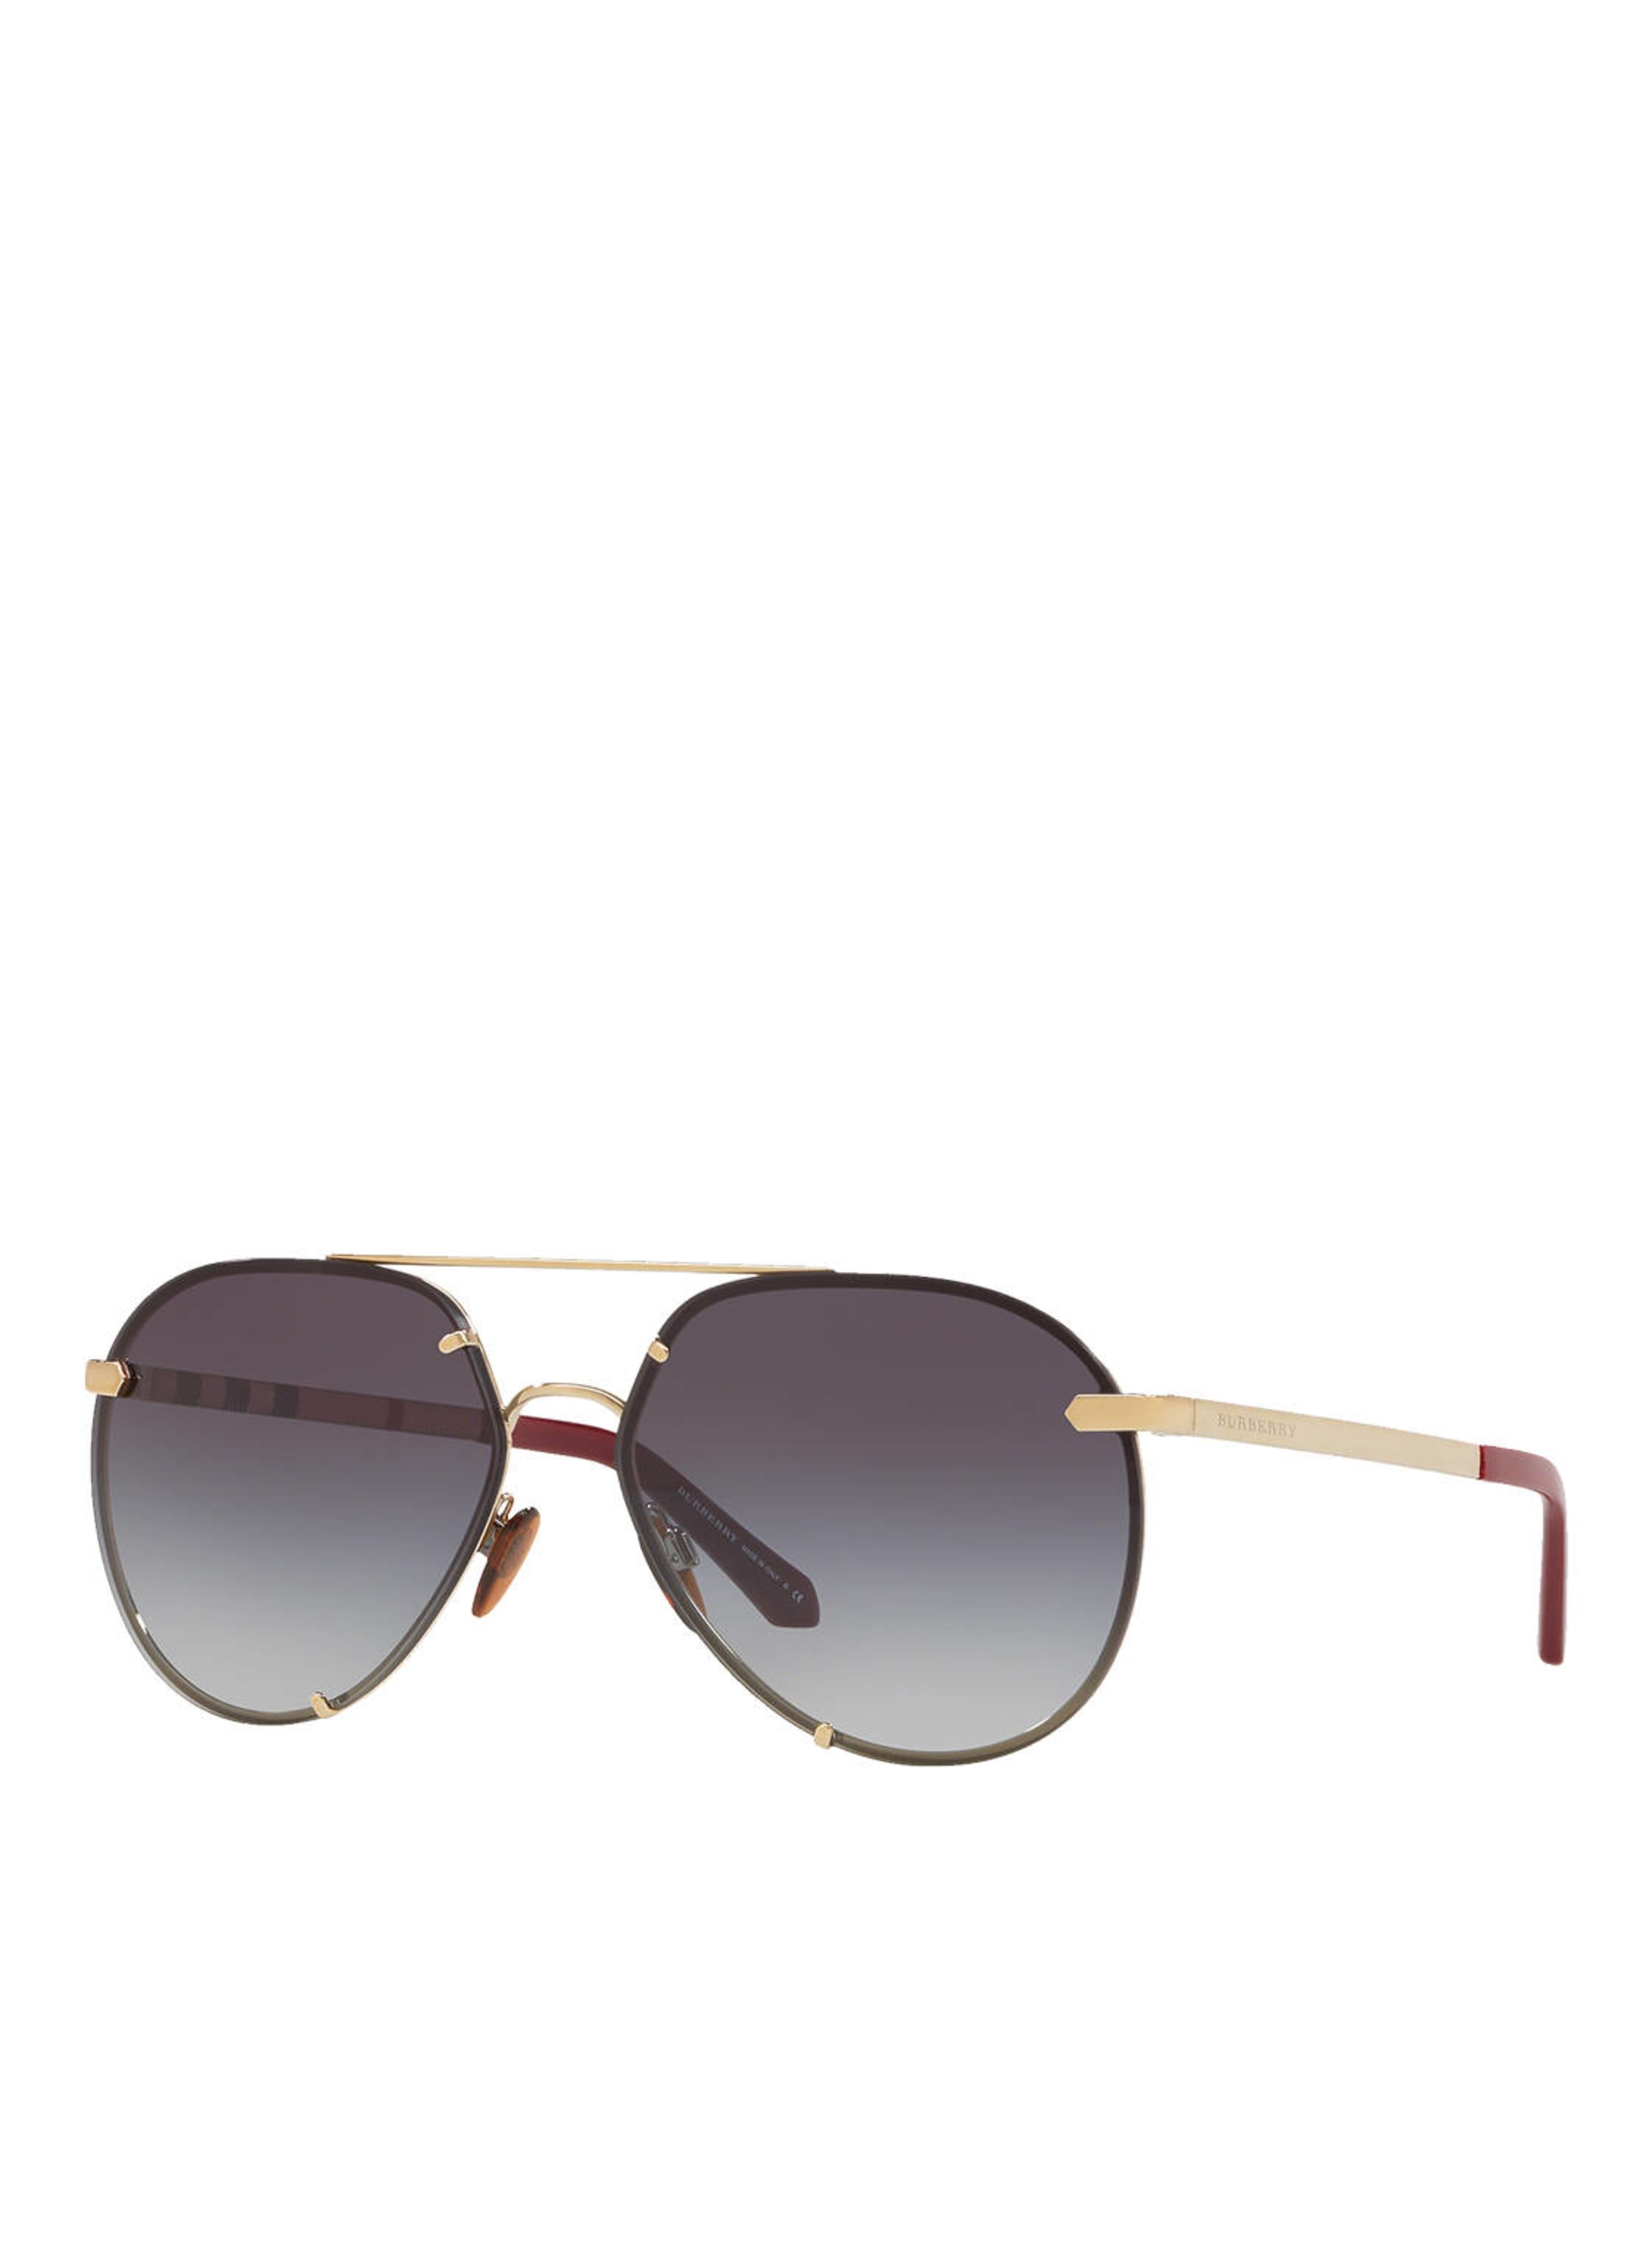 BURBERRY Sunglasses BE3099 in 11458g - gold/ gray gradient | Breuninger